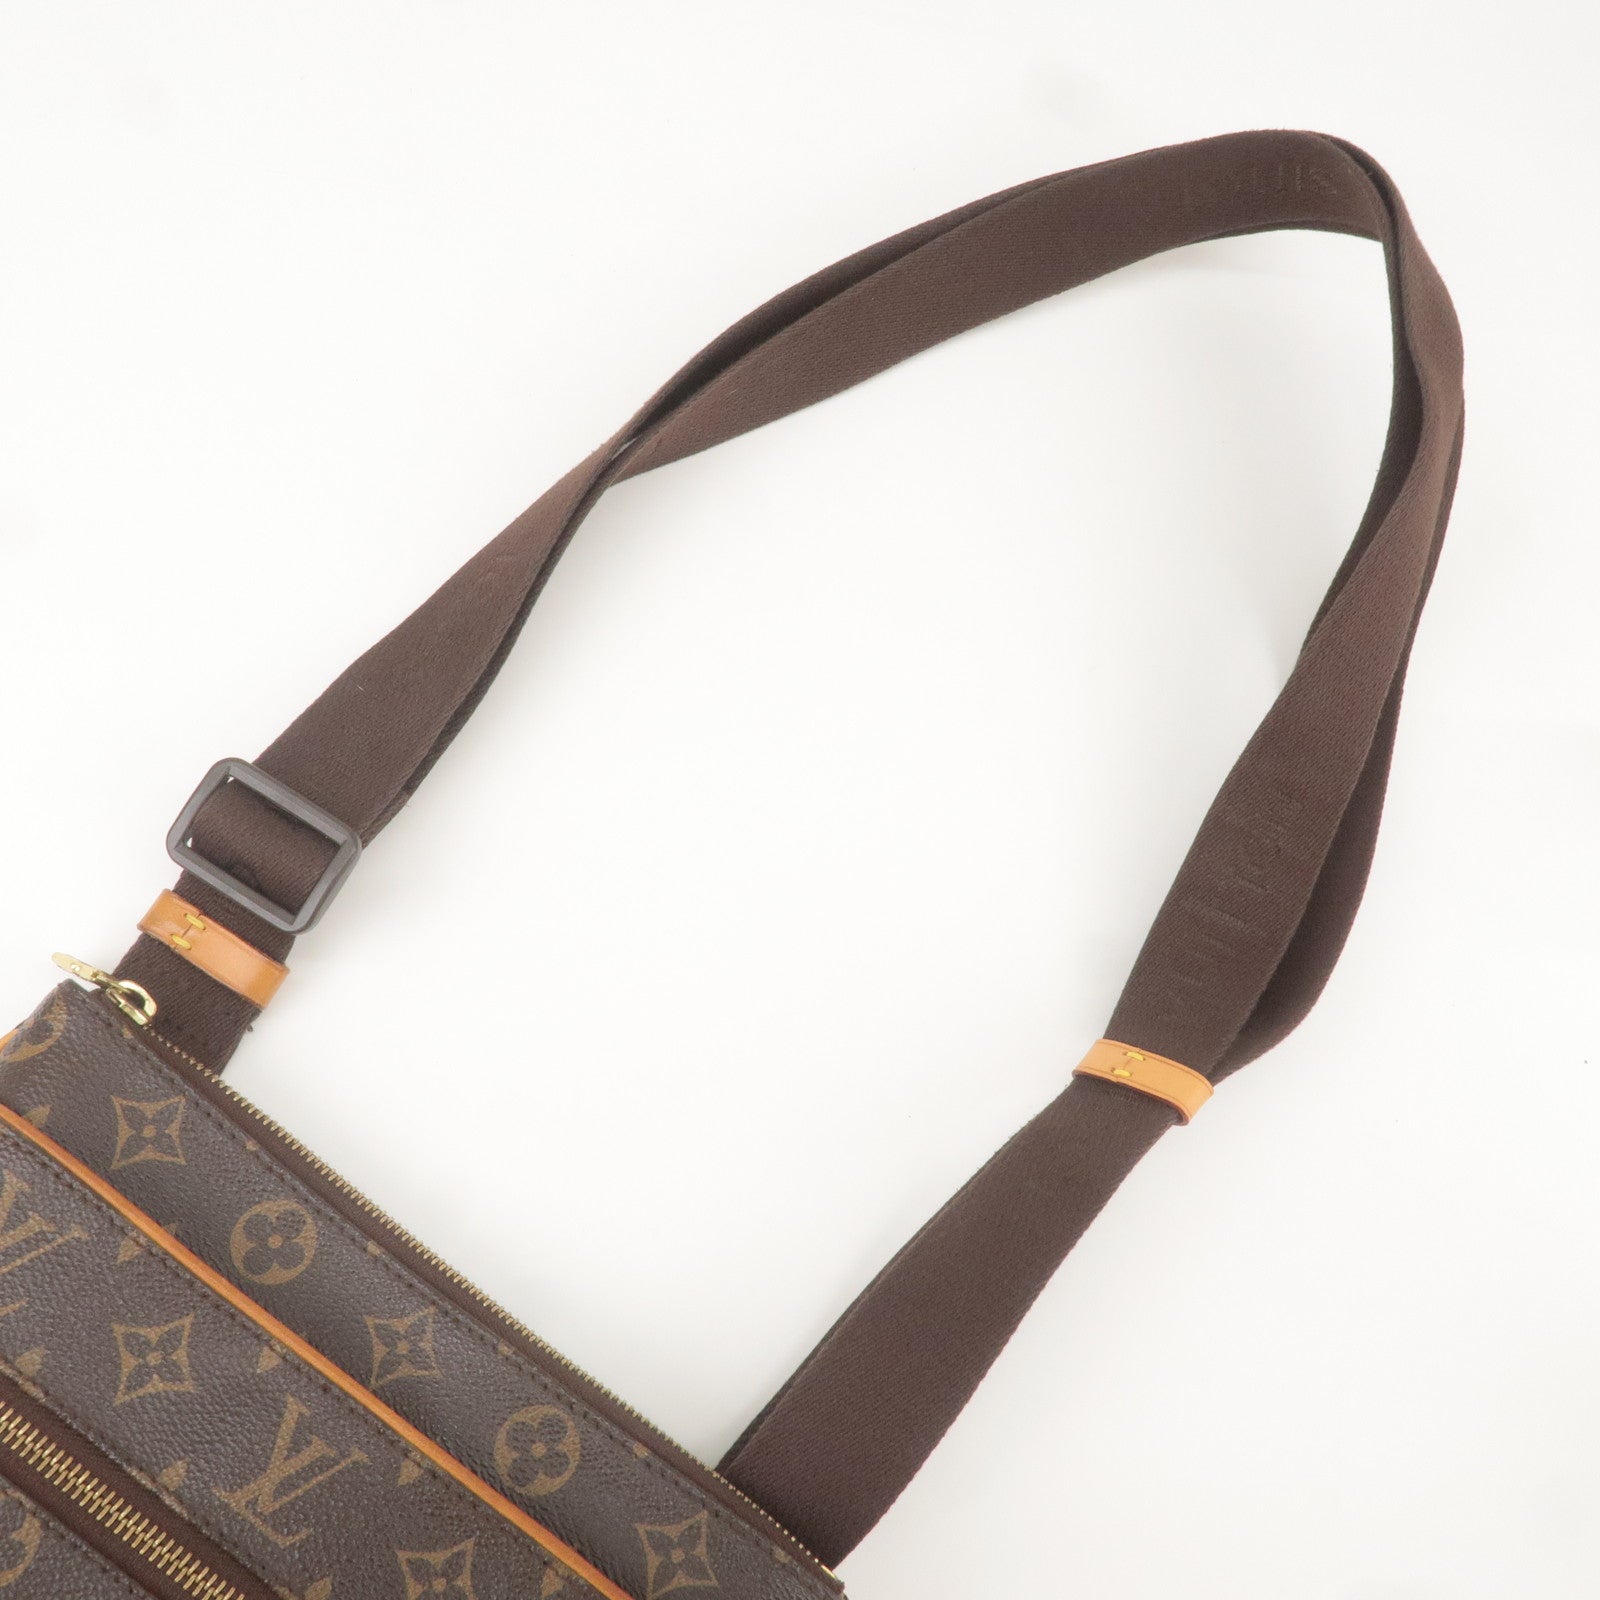 Louis Vuitton Pochette Valmy Monogram Shoulder Crossbody Bag M40524